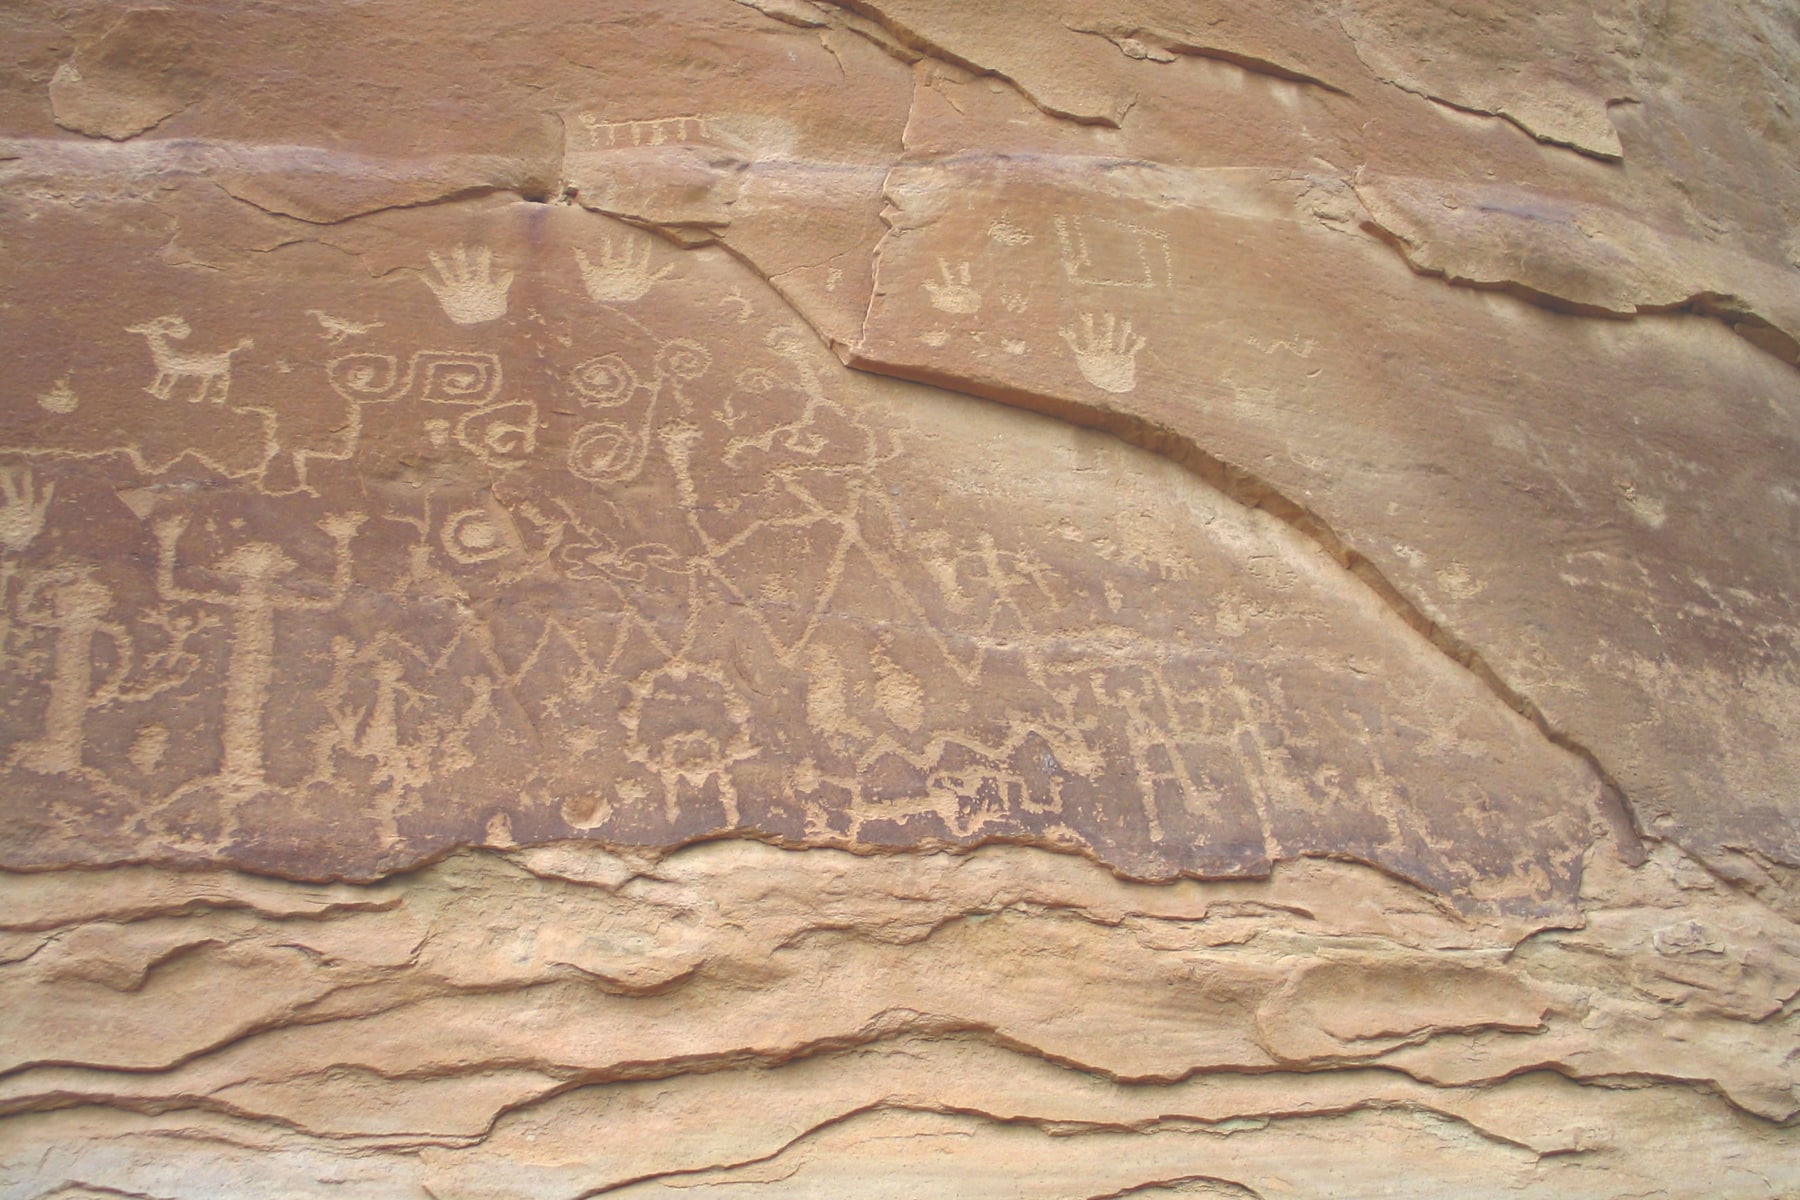 Petroglyphs in Mesa Verde National Park